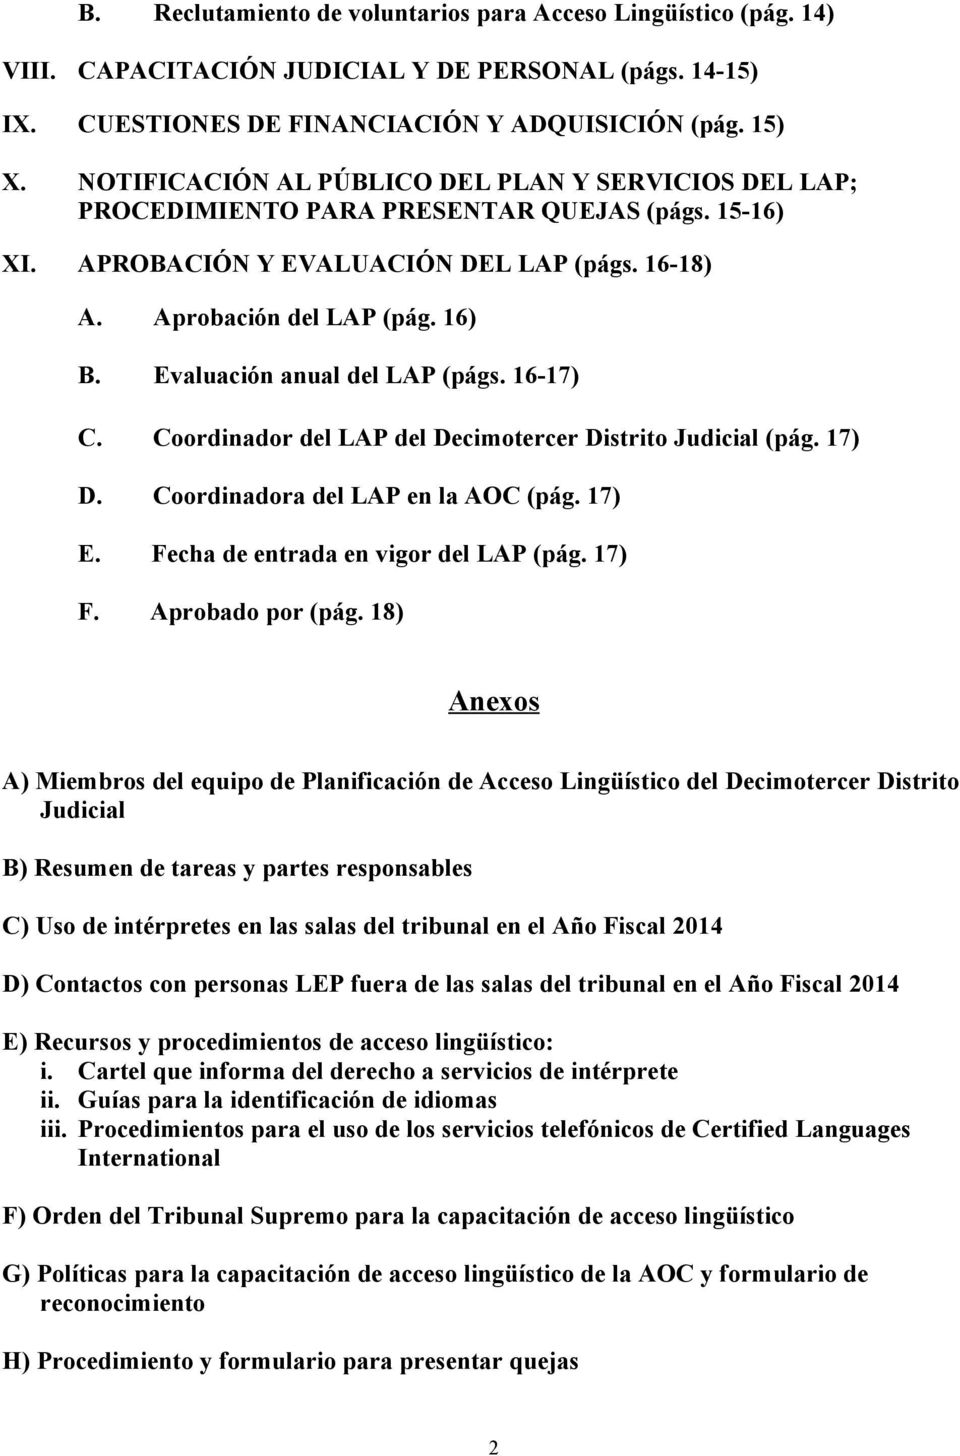 Evaluación anual del LAP (págs. 16-17) C. Coordinador del LAP del Decimotercer Distrito Judicial (pág. 17) D. Coordinadora del LAP en la AOC (pág. 17) E. Fecha de entrada en vigor del LAP (pág. 17) F.